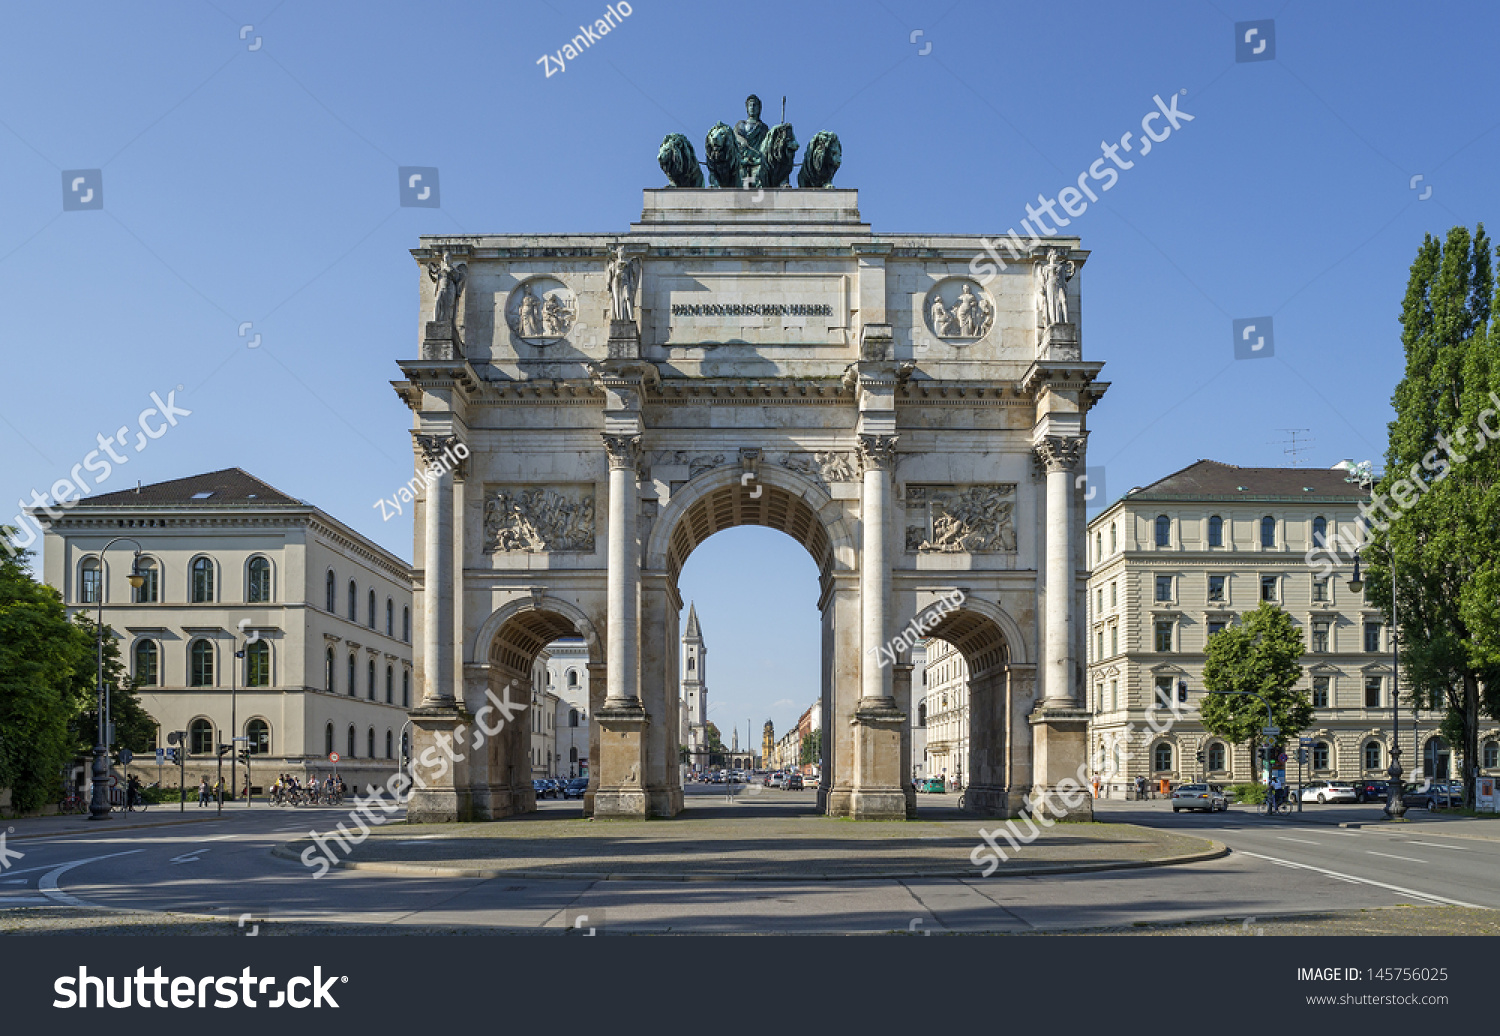 Historic Arc De Triomphe Siegestor Munich Stock Photo 145756025 ...